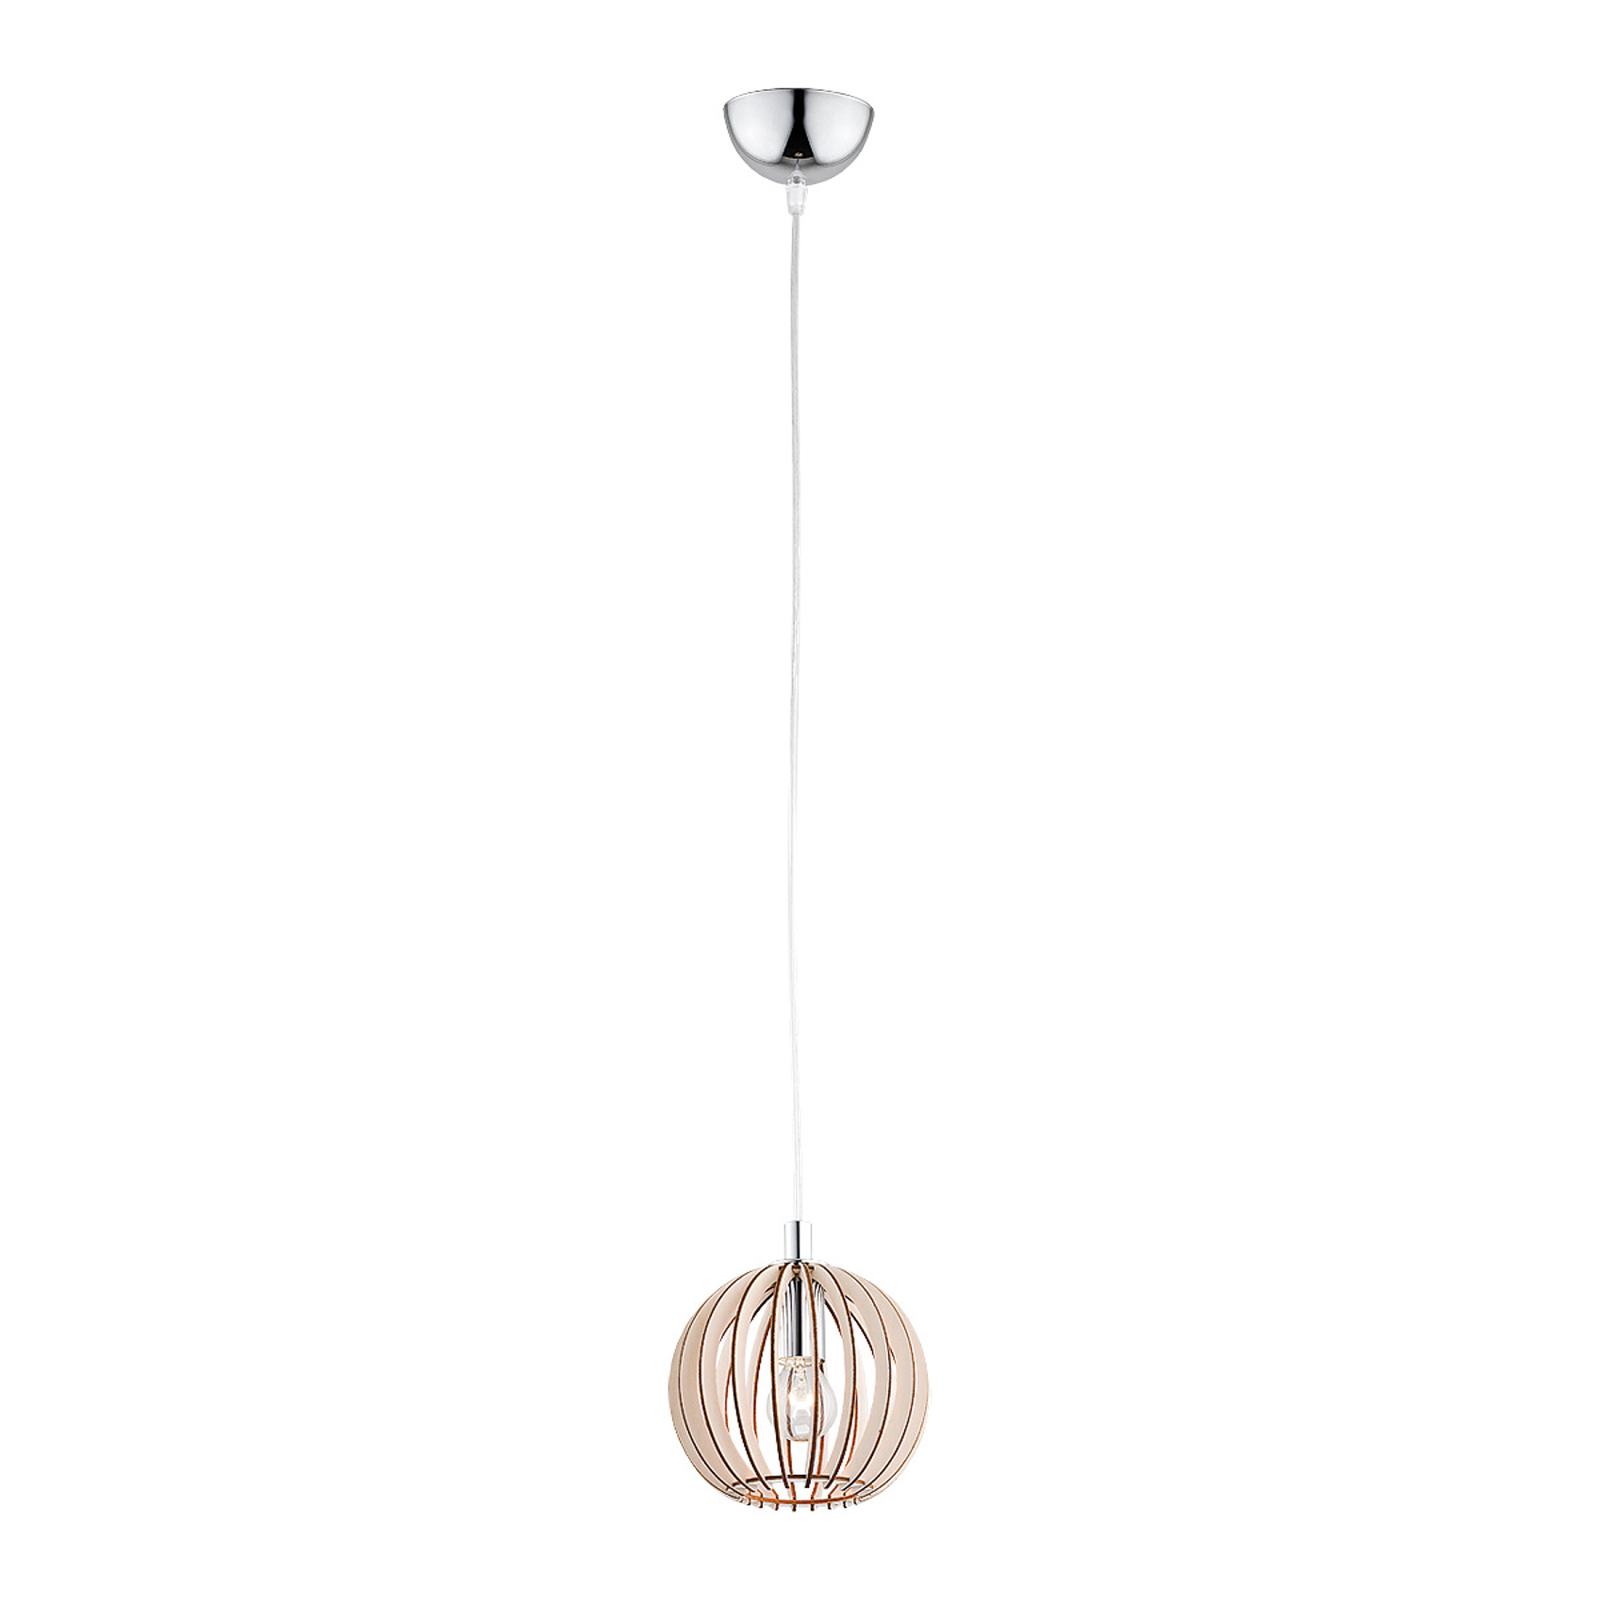 Paz hanging light, wooden slats, globe, Ø 17 cm